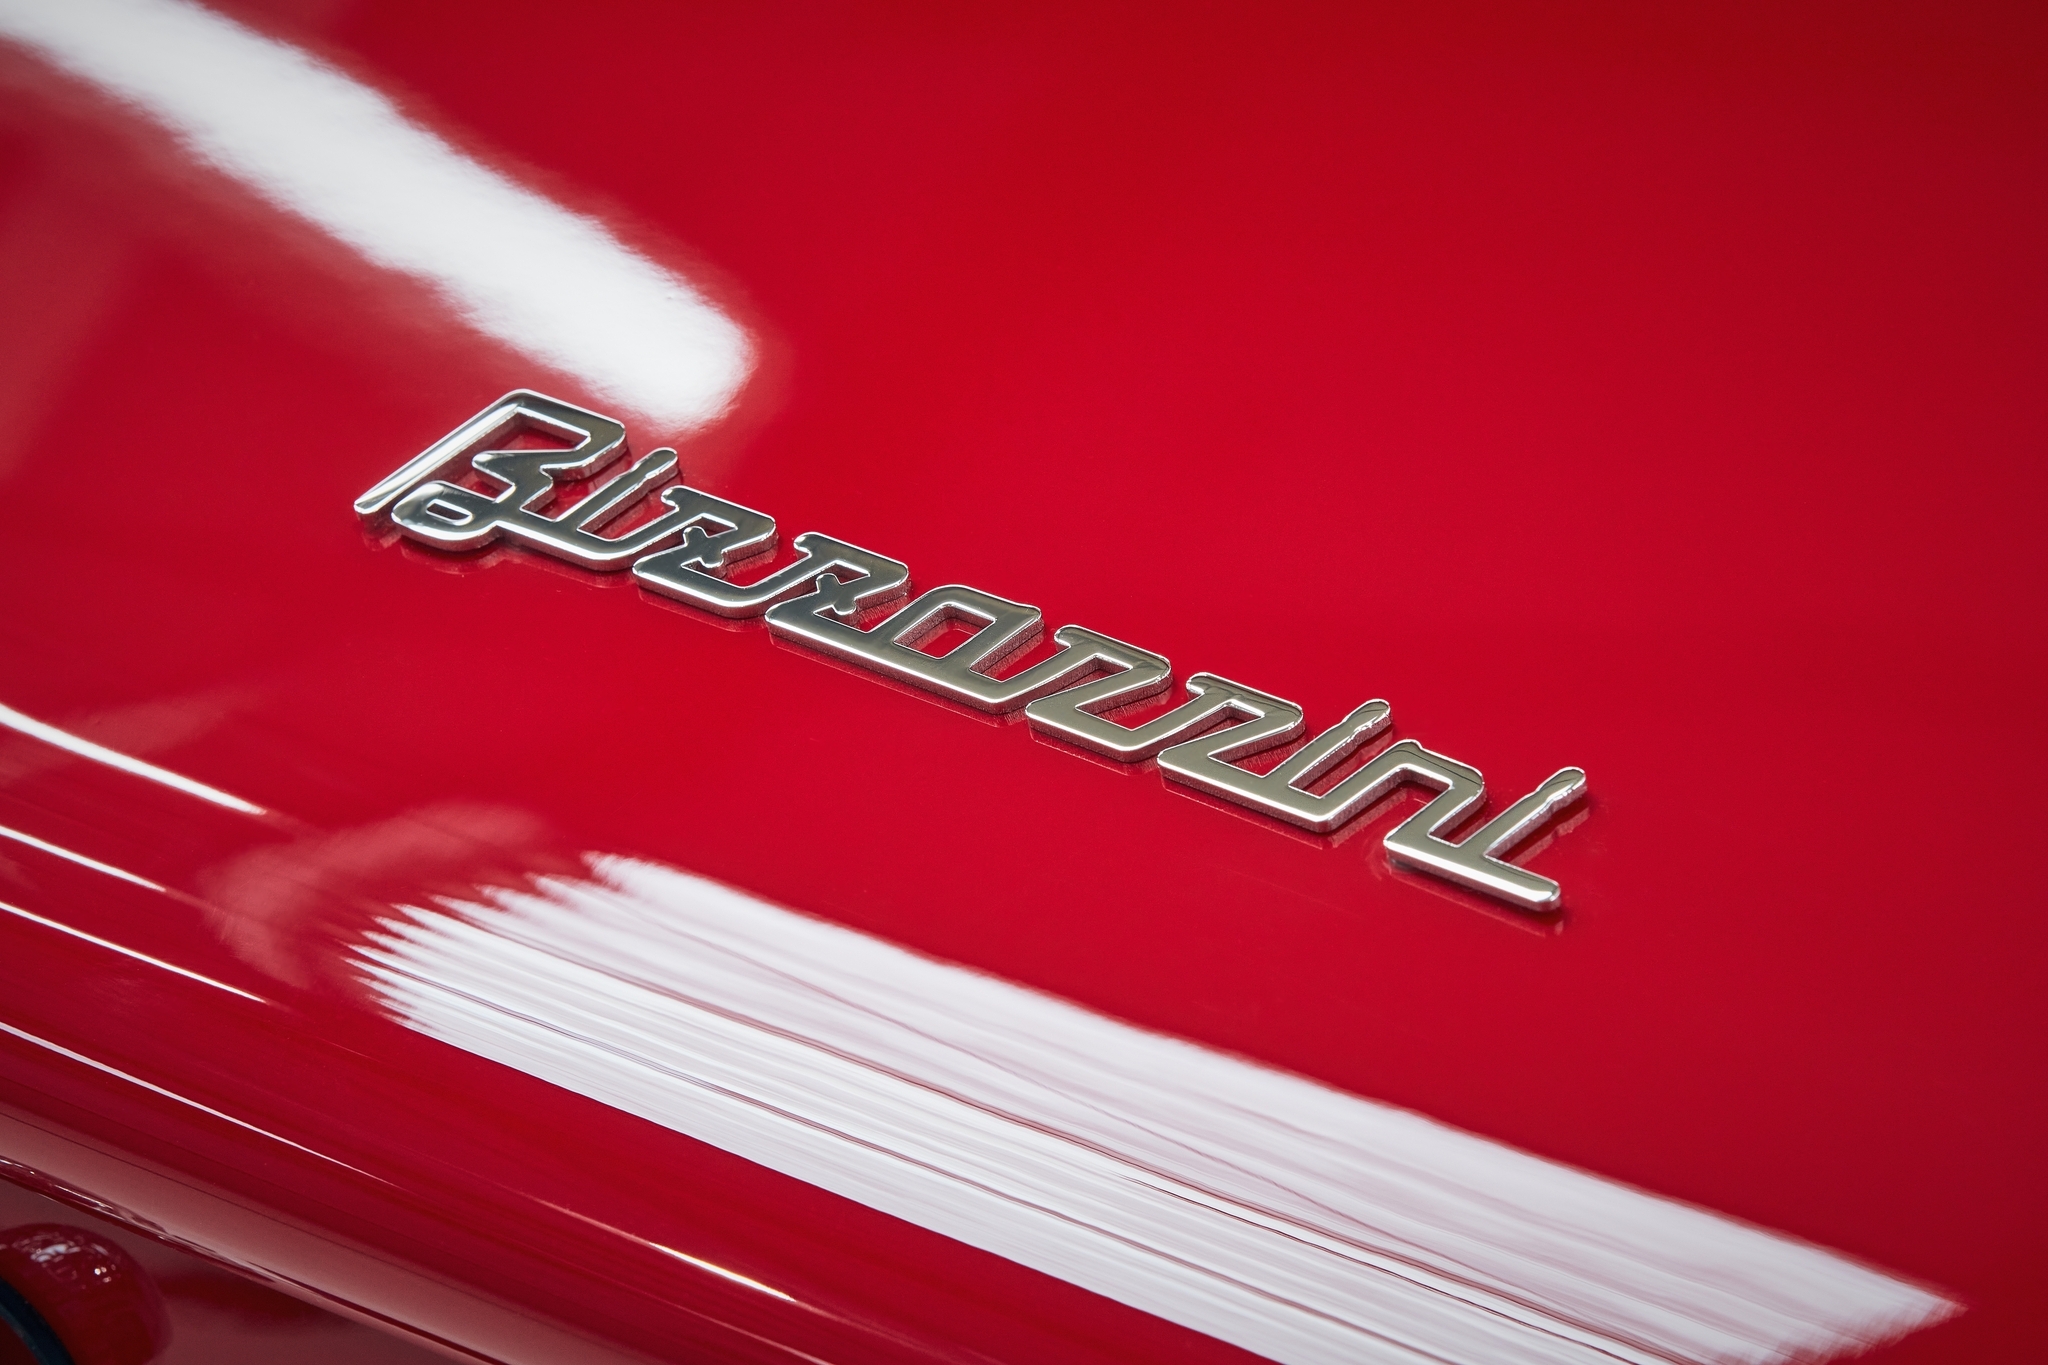 Bizzarrini начала выпуск классического спорткара 5300 GT Revival Corsa